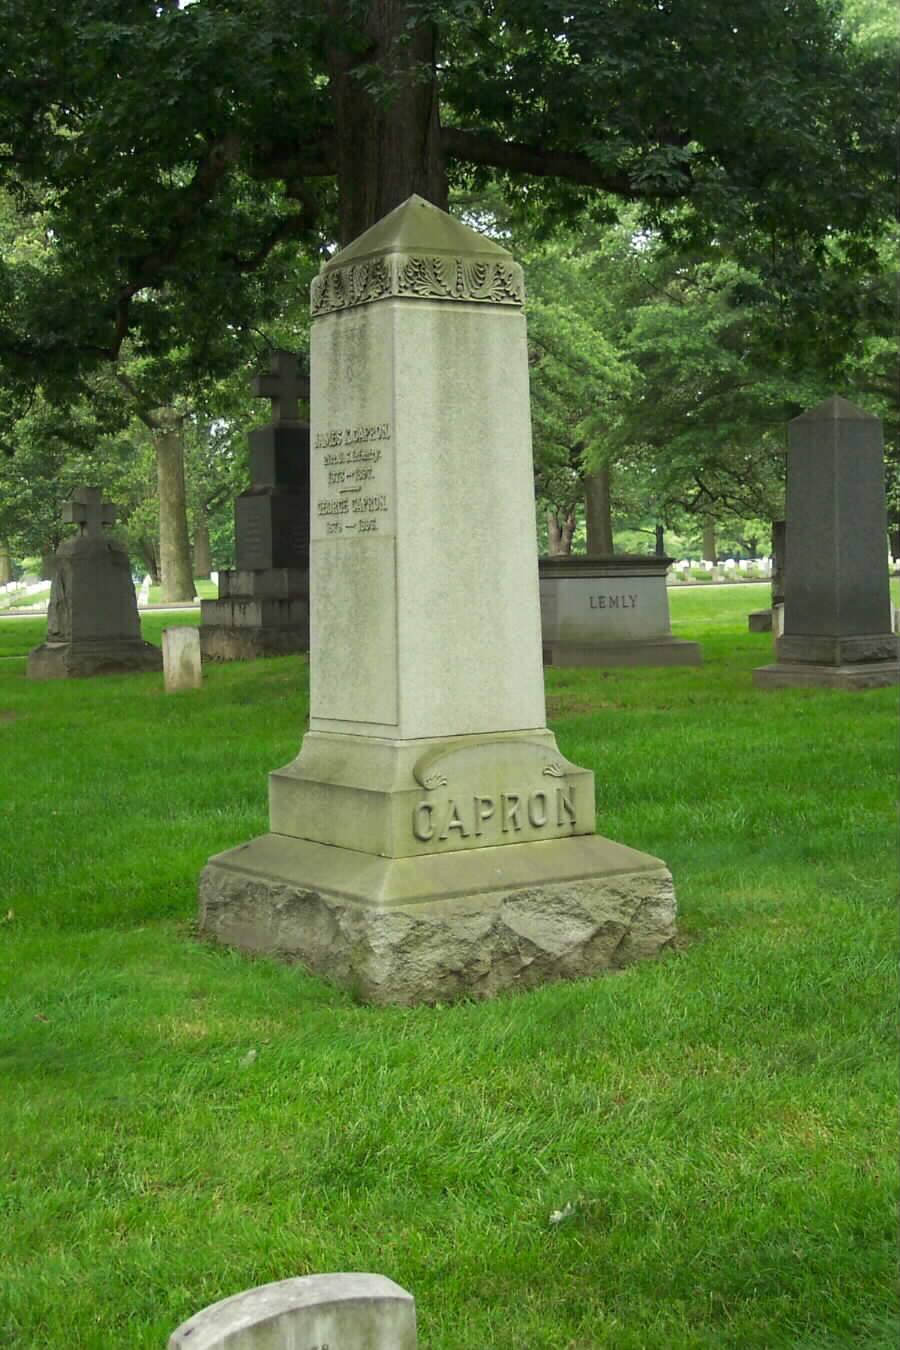 capron-gravesite-03-062803